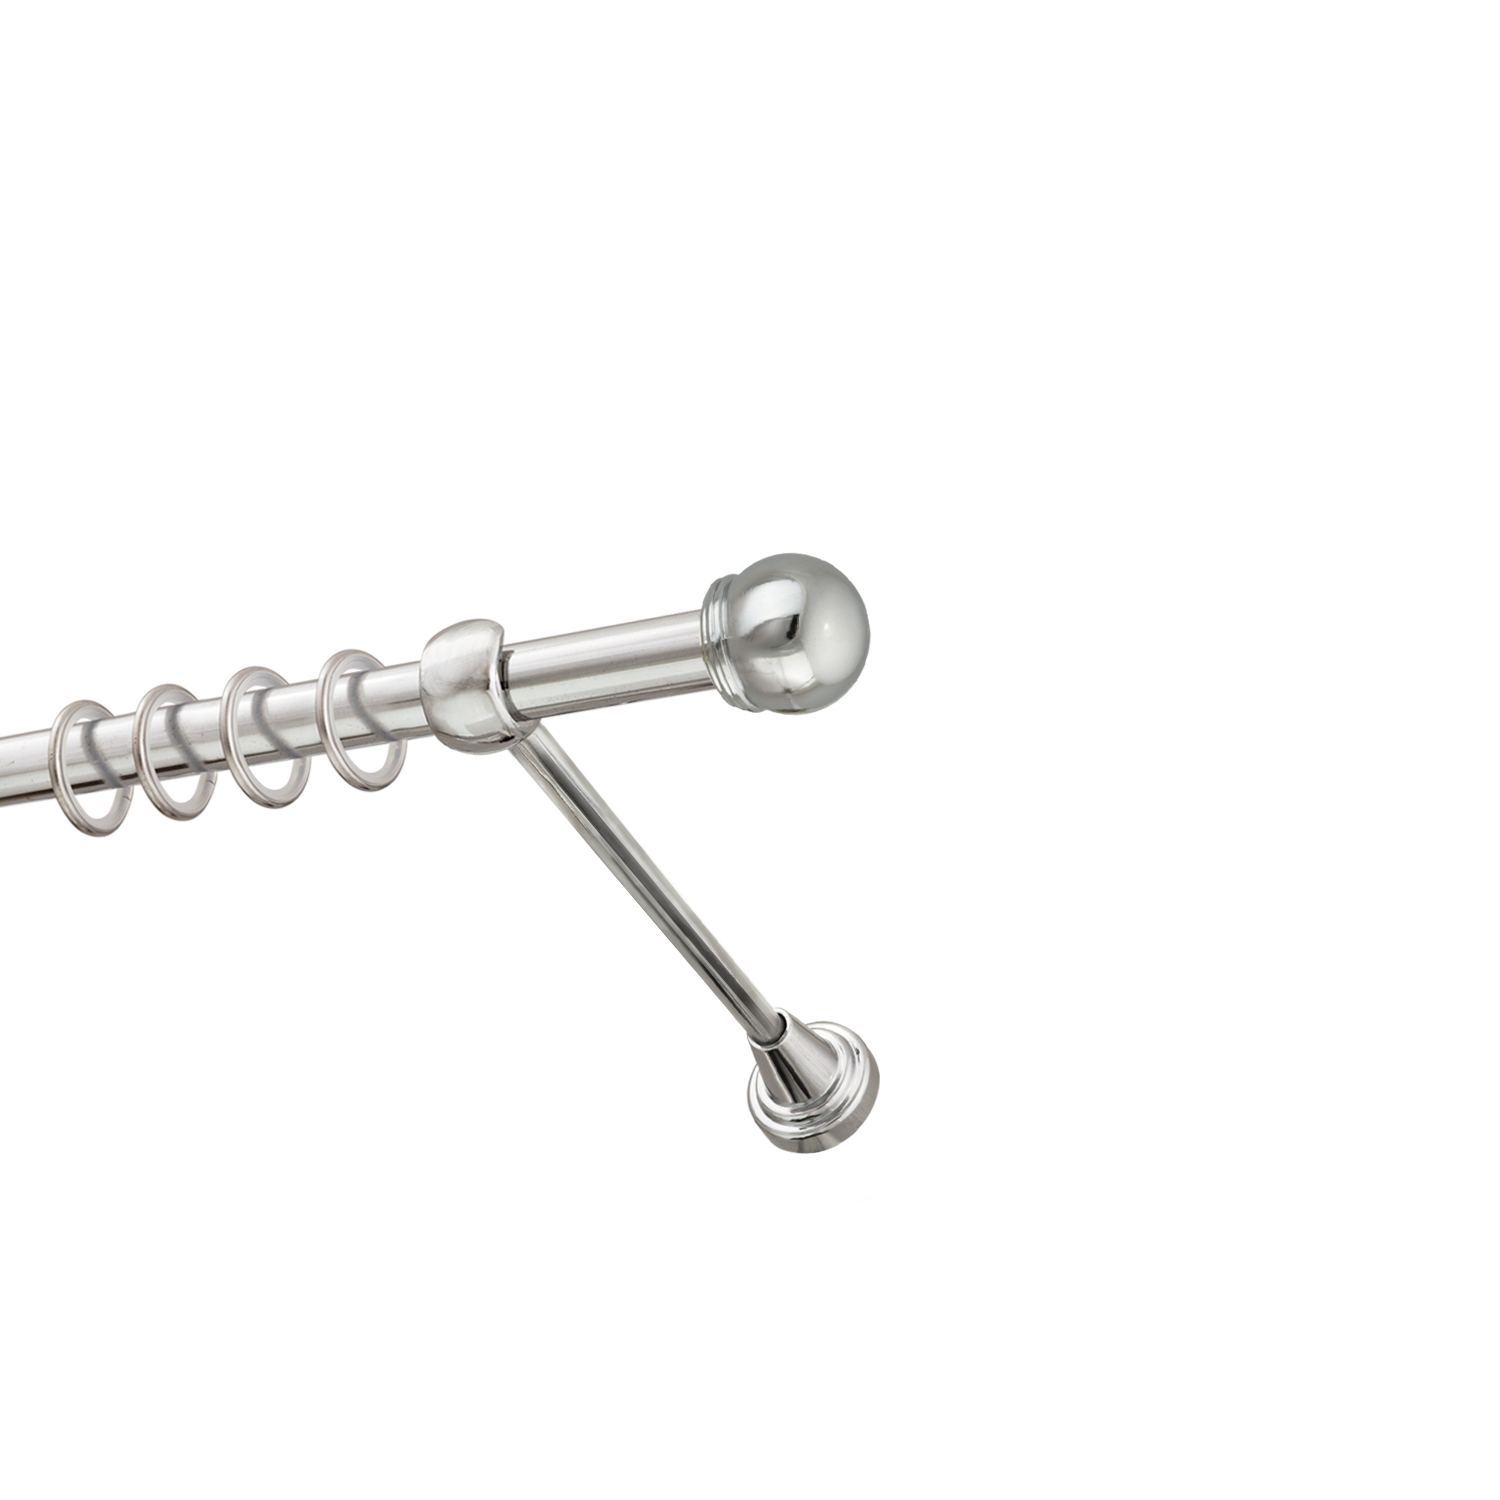 Металлический карниз для штор Вива, однорядный 16 мм, серебро, гладкая штанга, длина 240 см - фото Wikidecor.ru